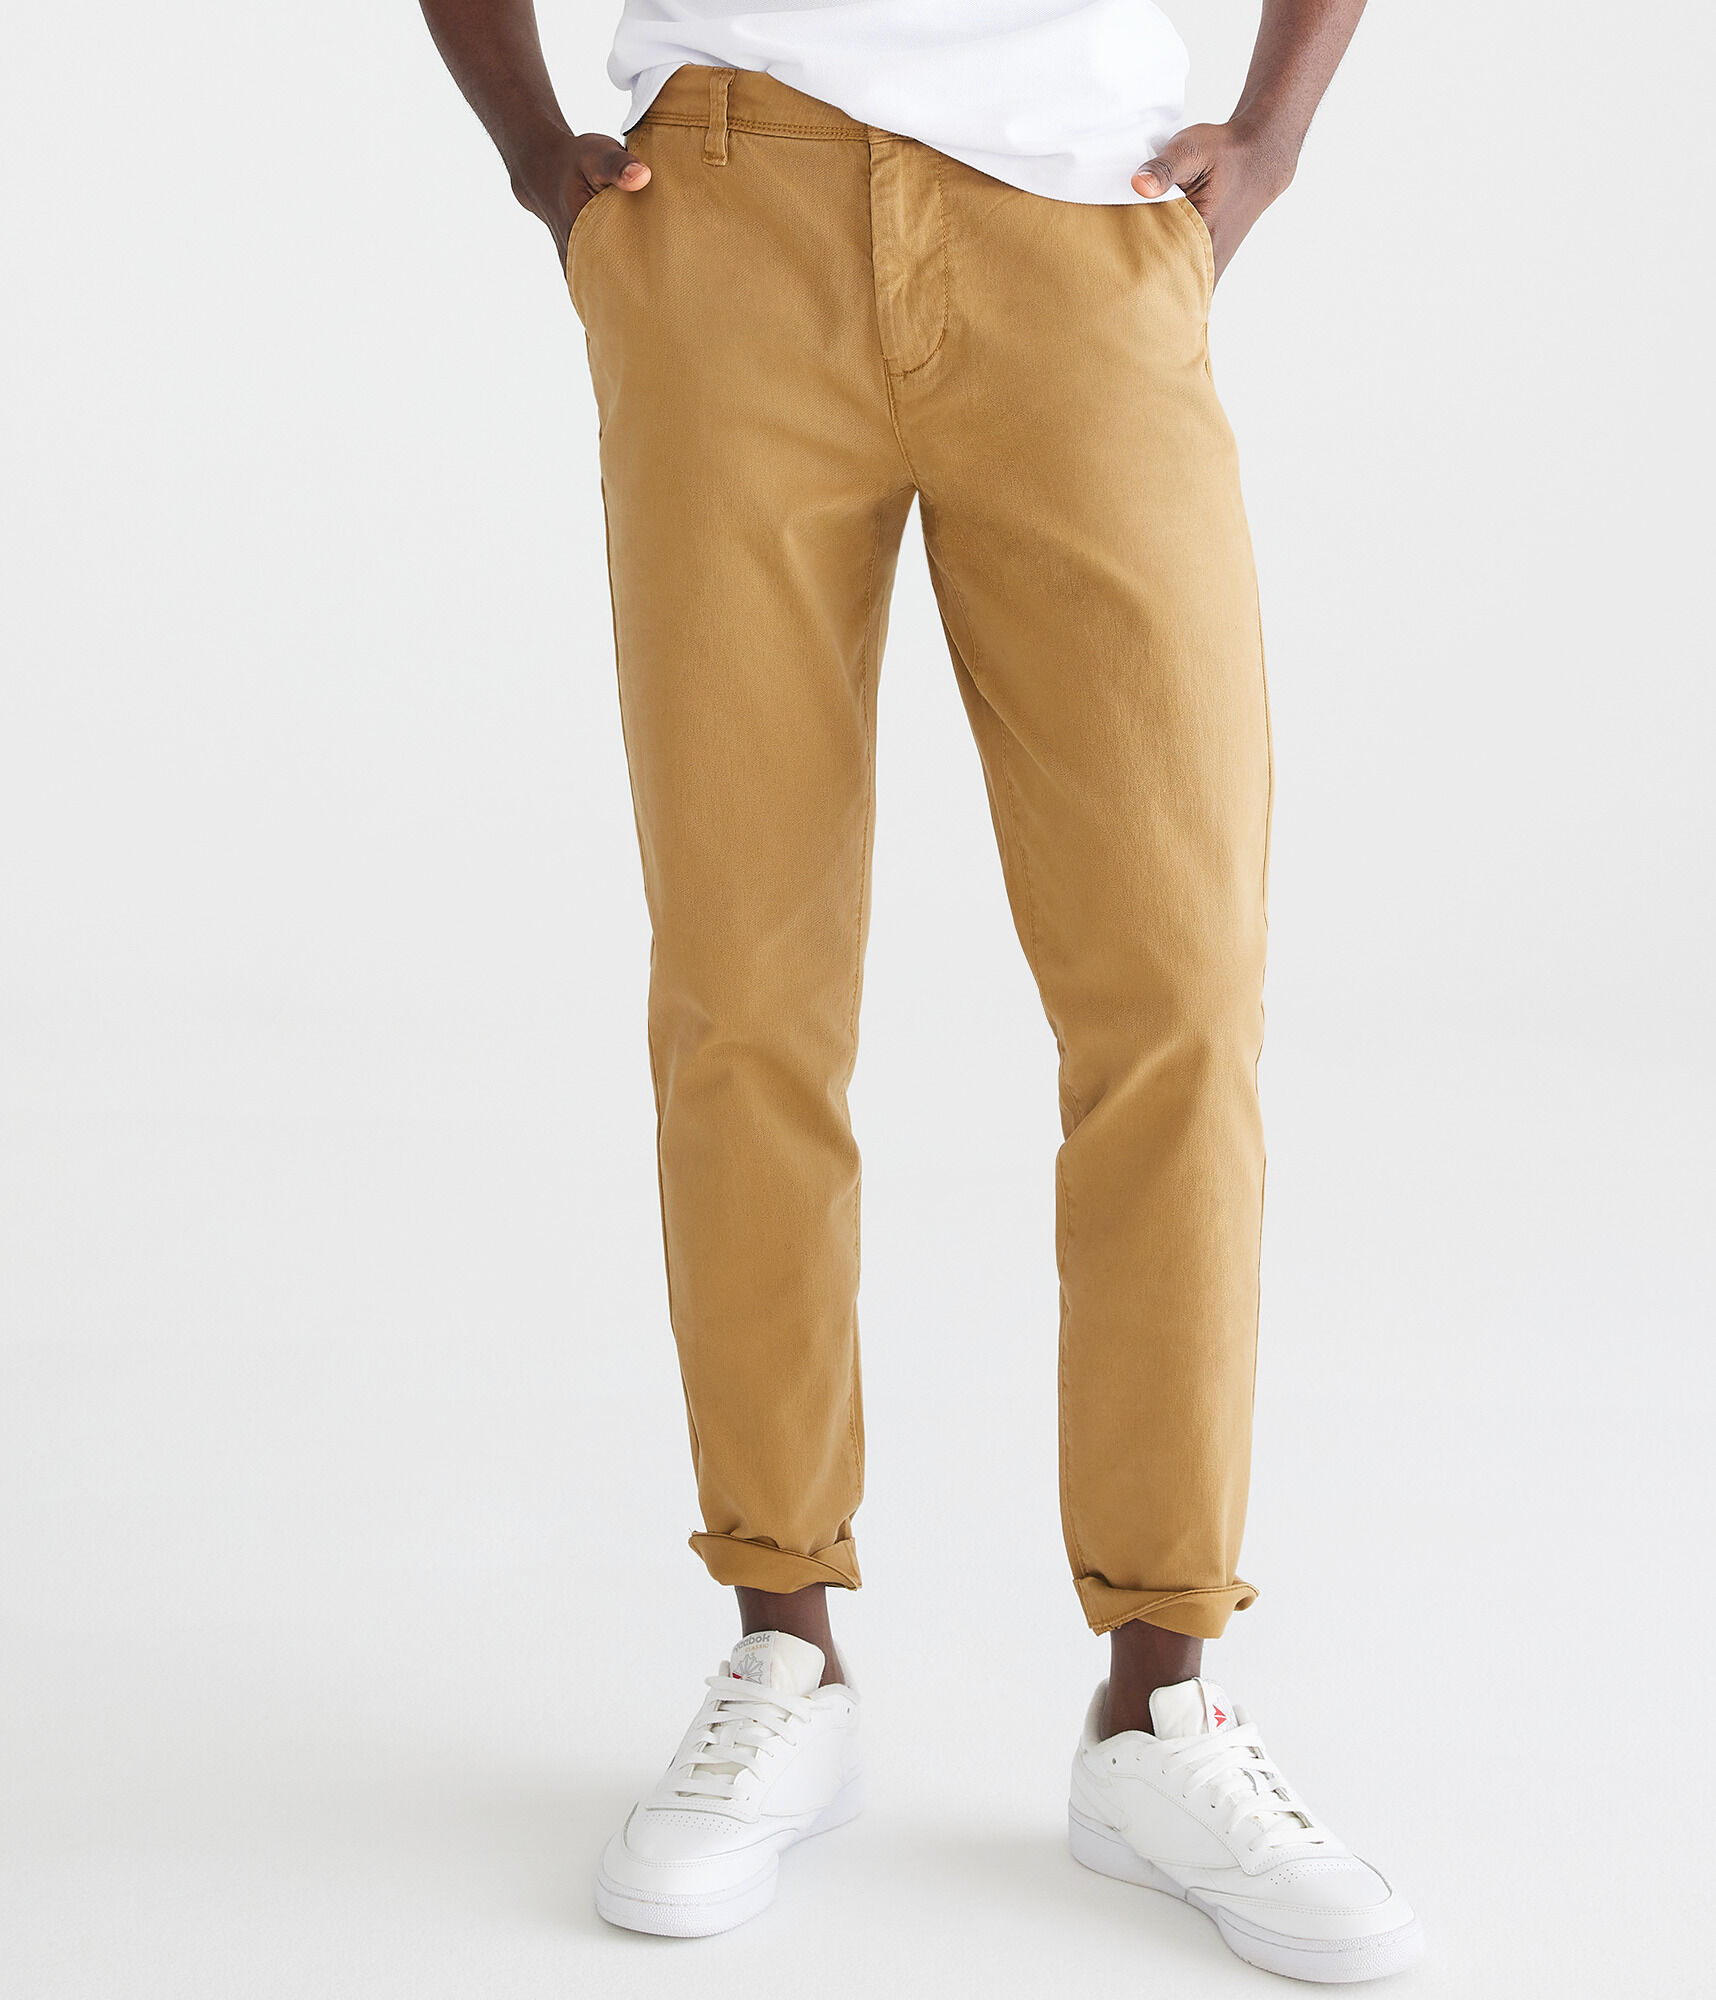 Узкие брюки чинос Aeropostale, коричневый